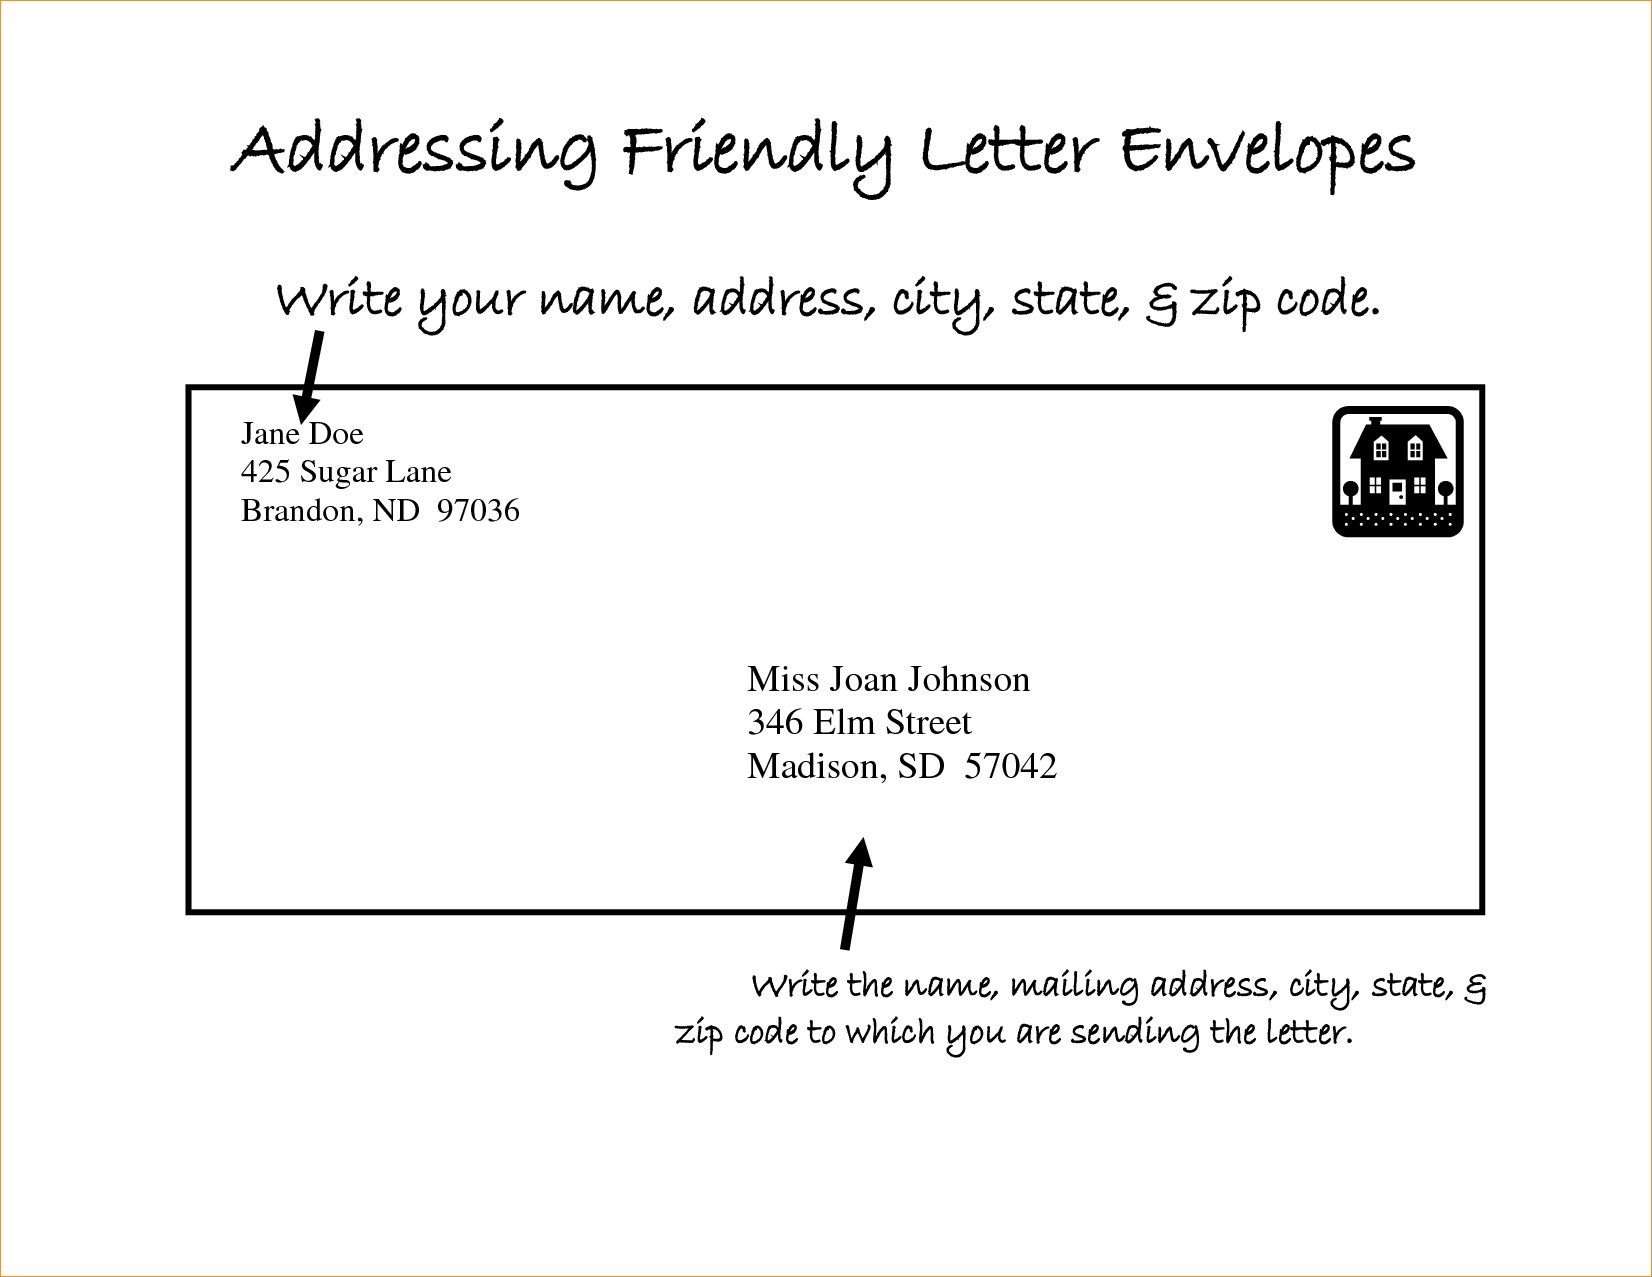 Sending A Letter Format Fabulous Format To Sending A Letter 